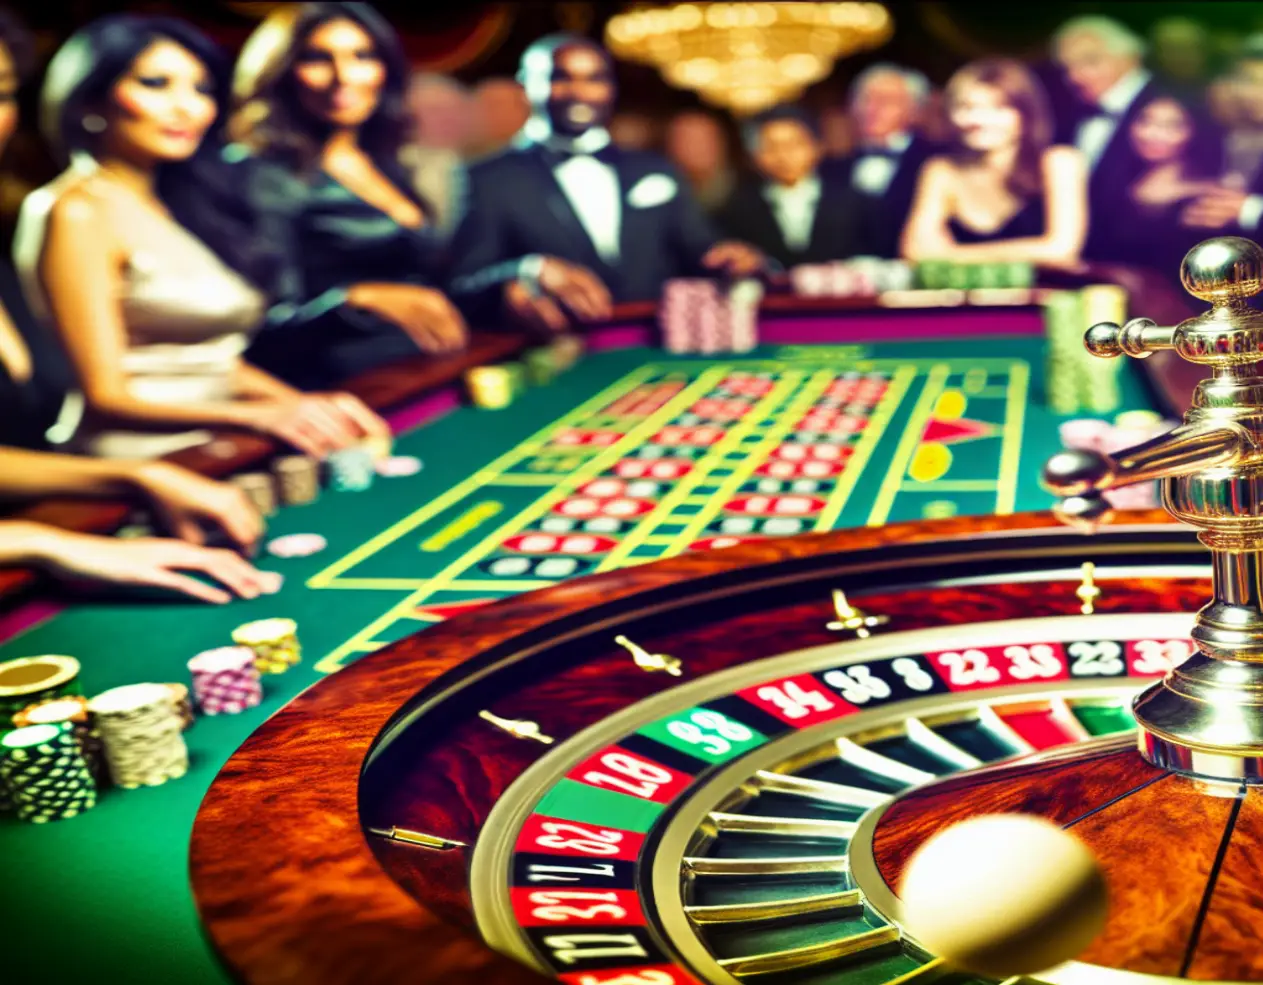 kazino roulette